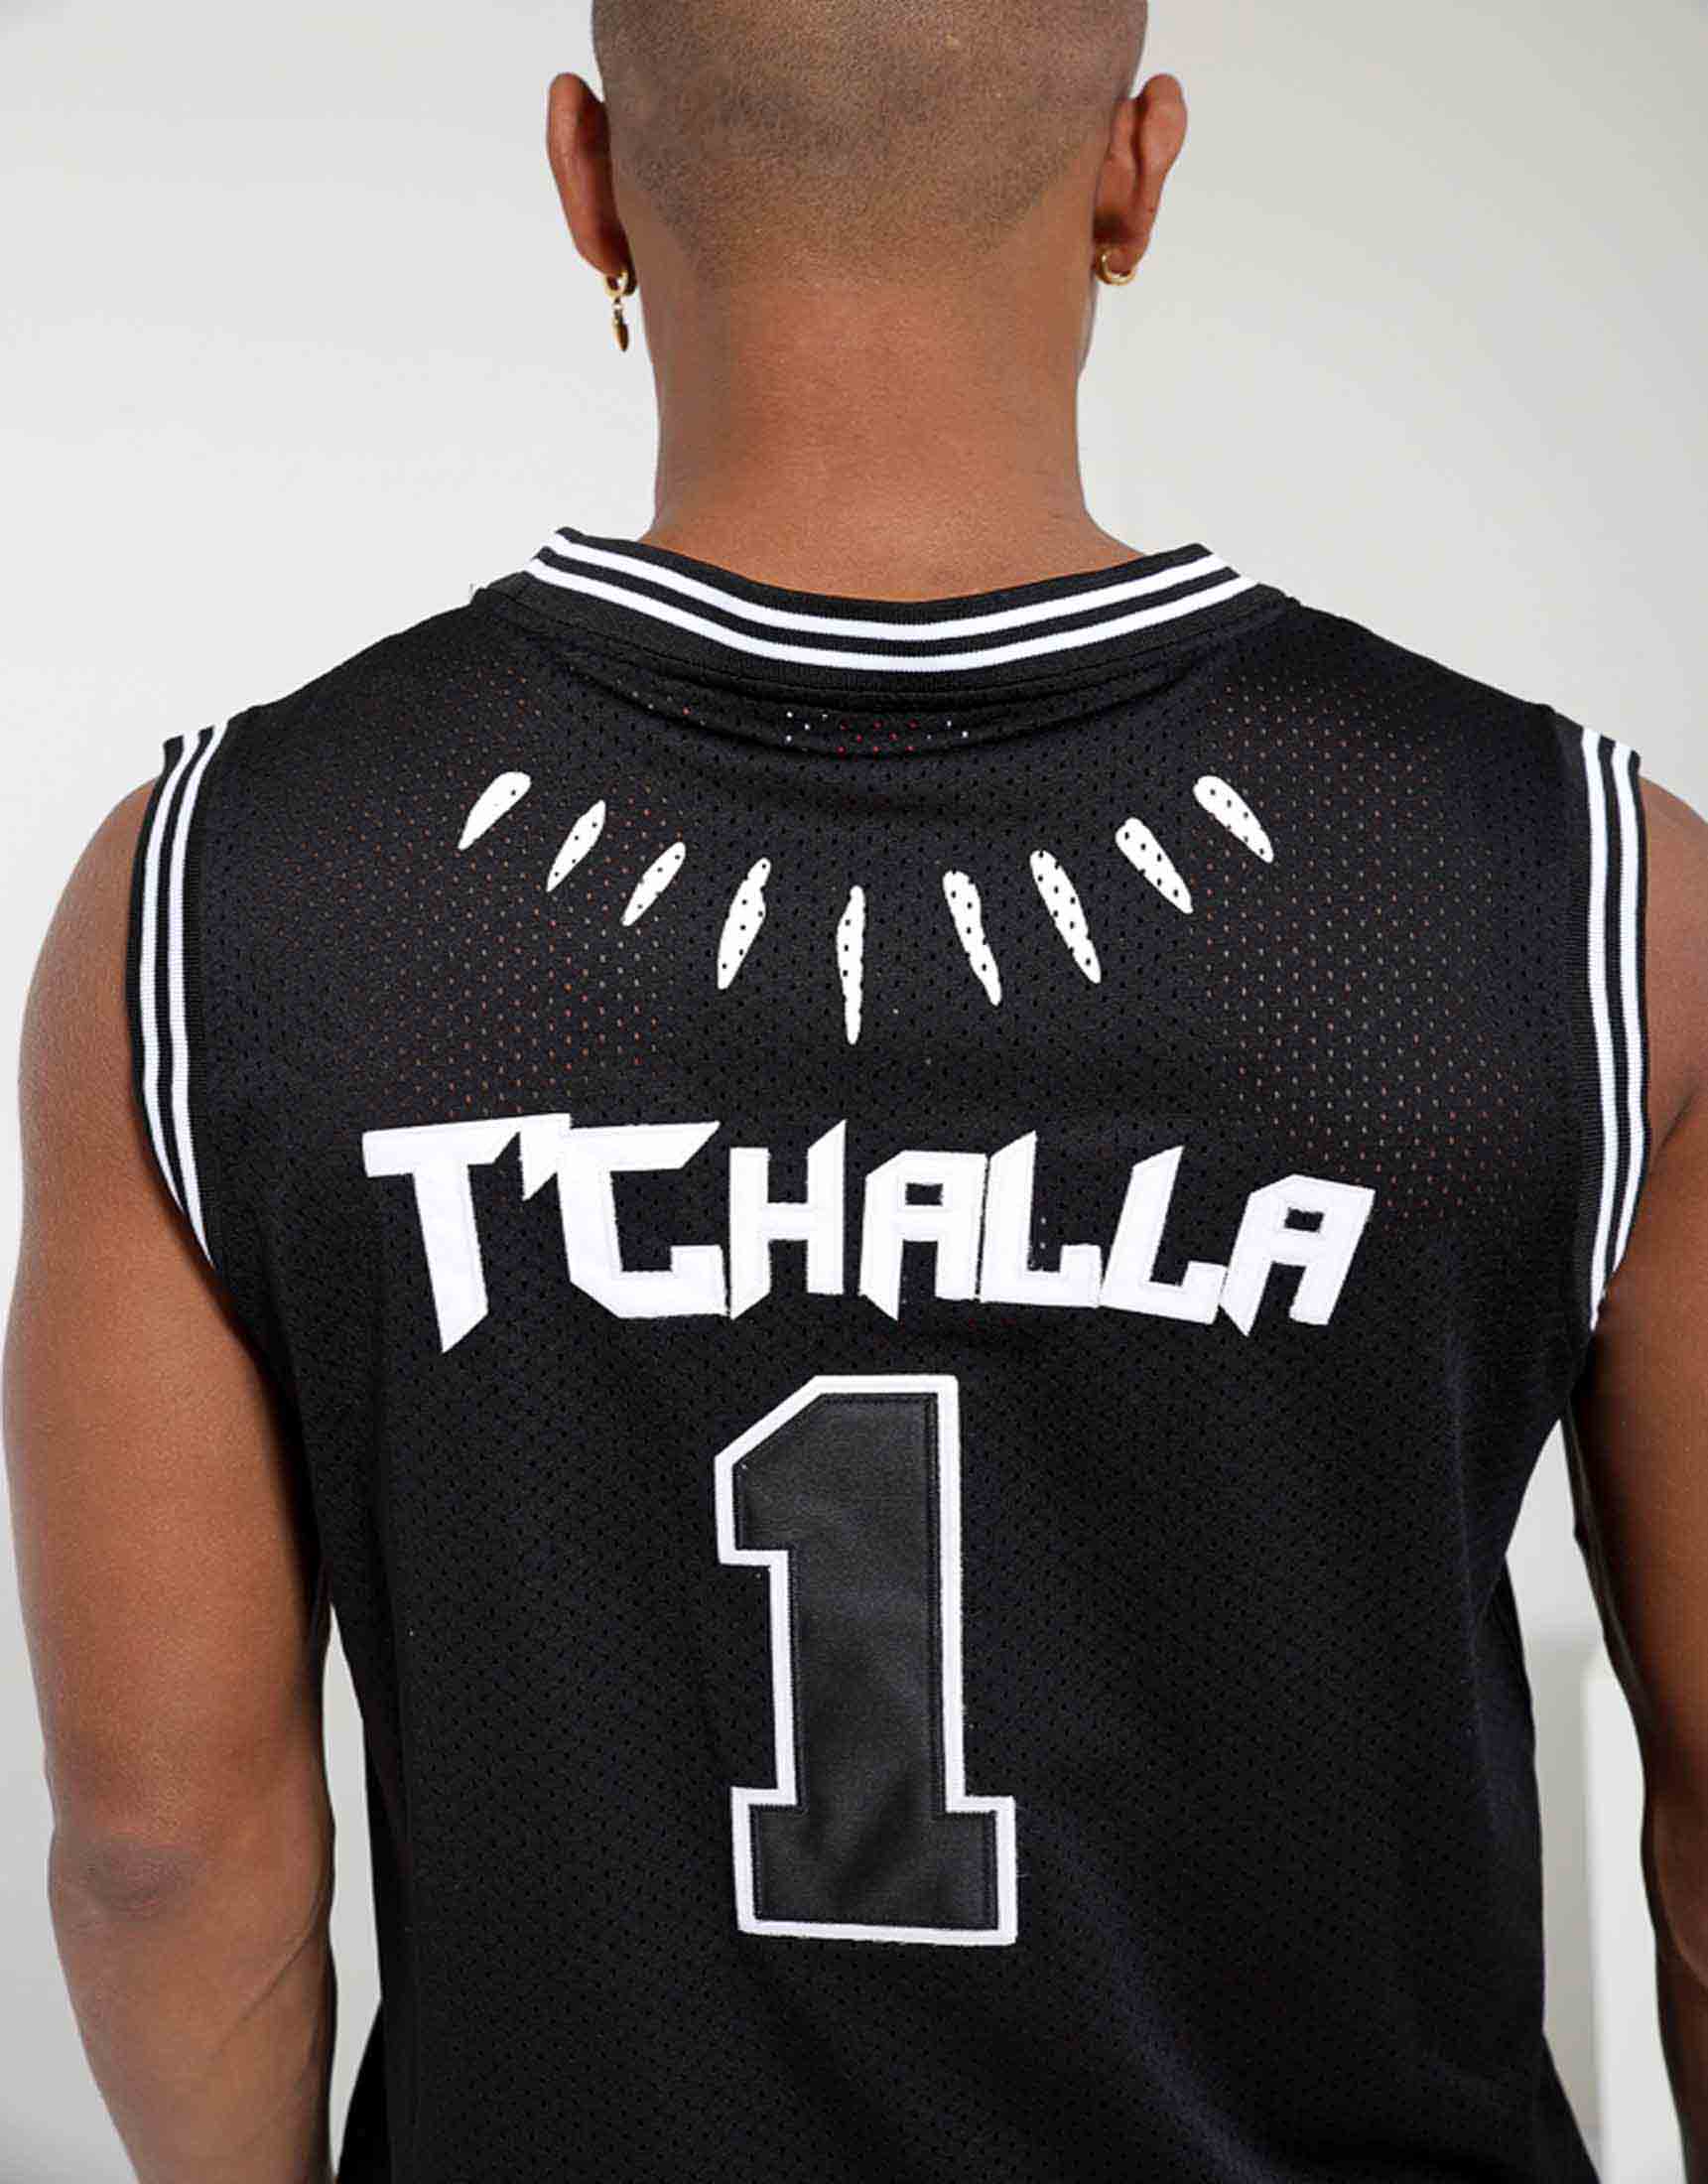 black panther basketball jersey